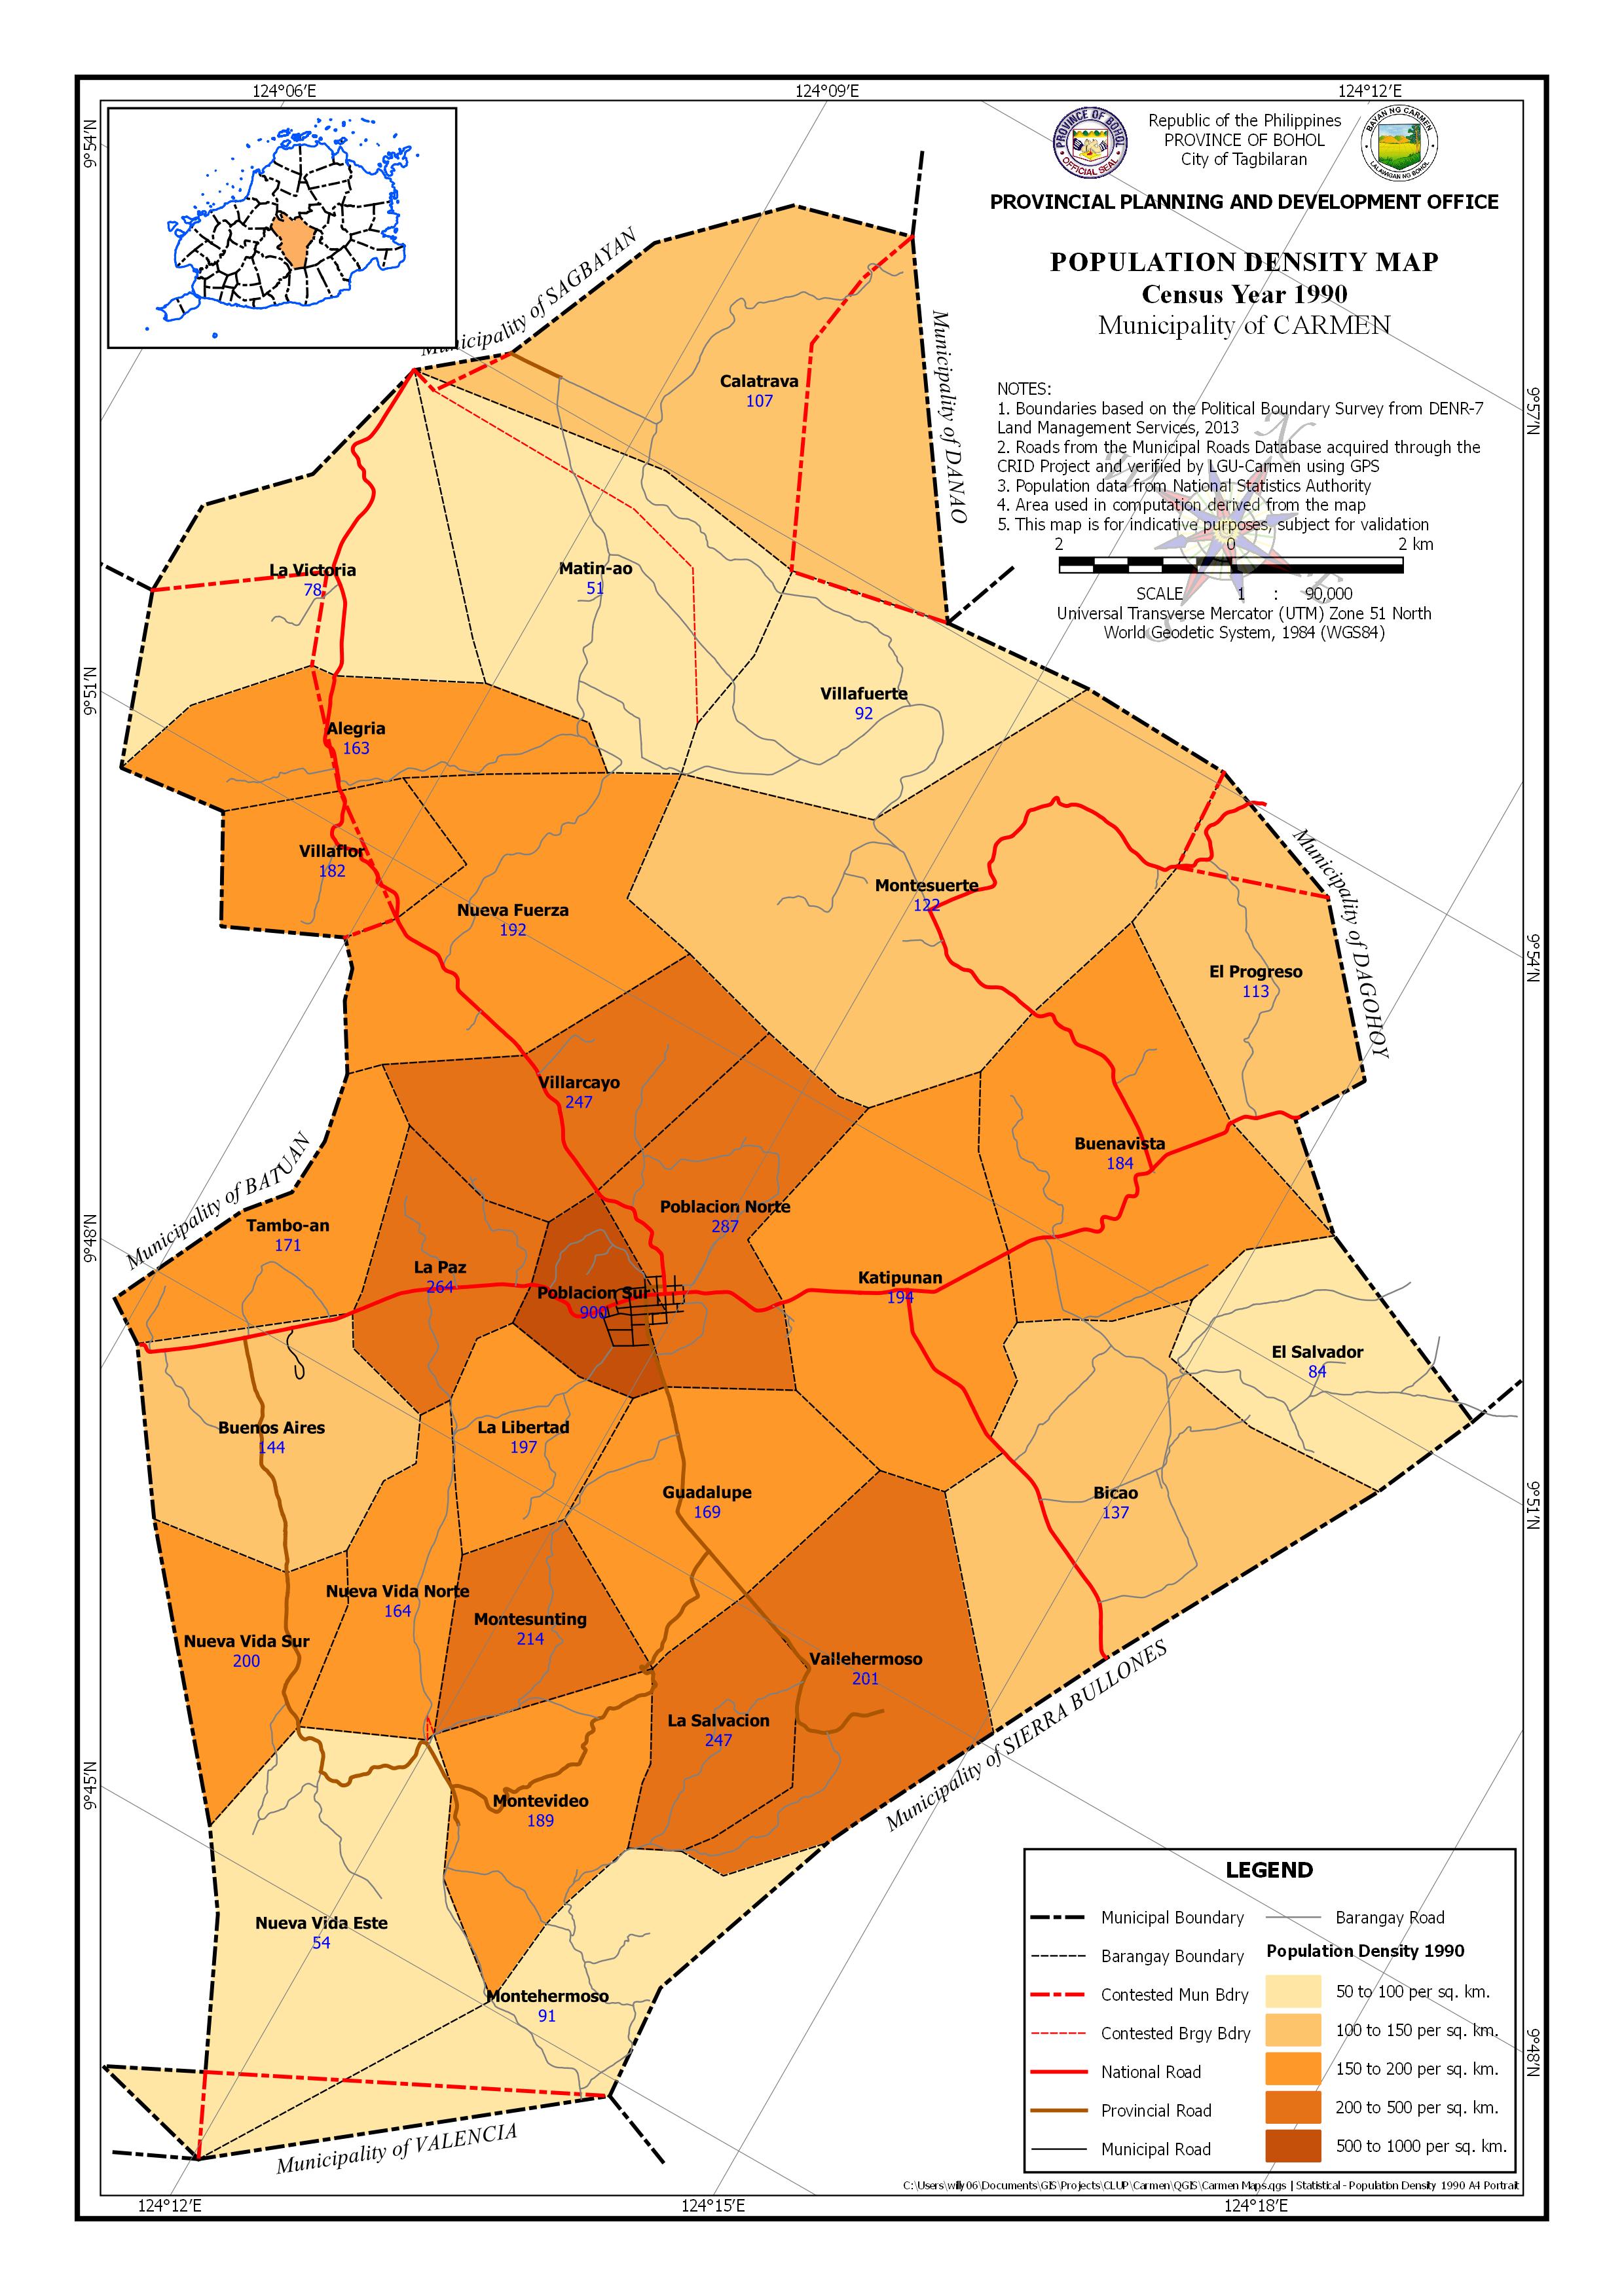 Population Density Census Year: 19905